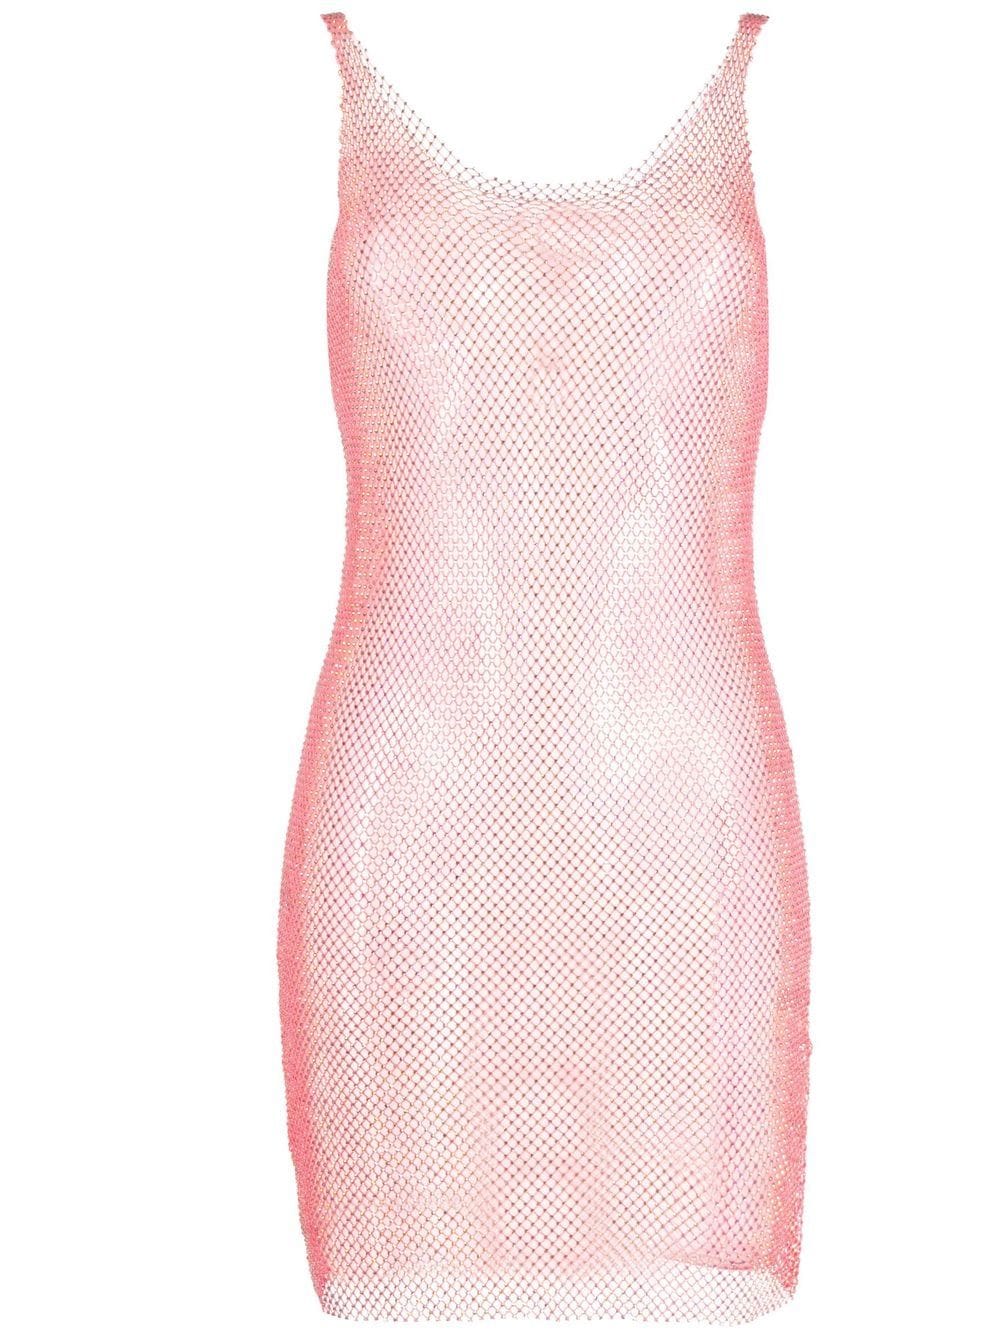 SANTA BRANDS-Sydney Mini Dress-SB SD SMND PINK RASPBERRY